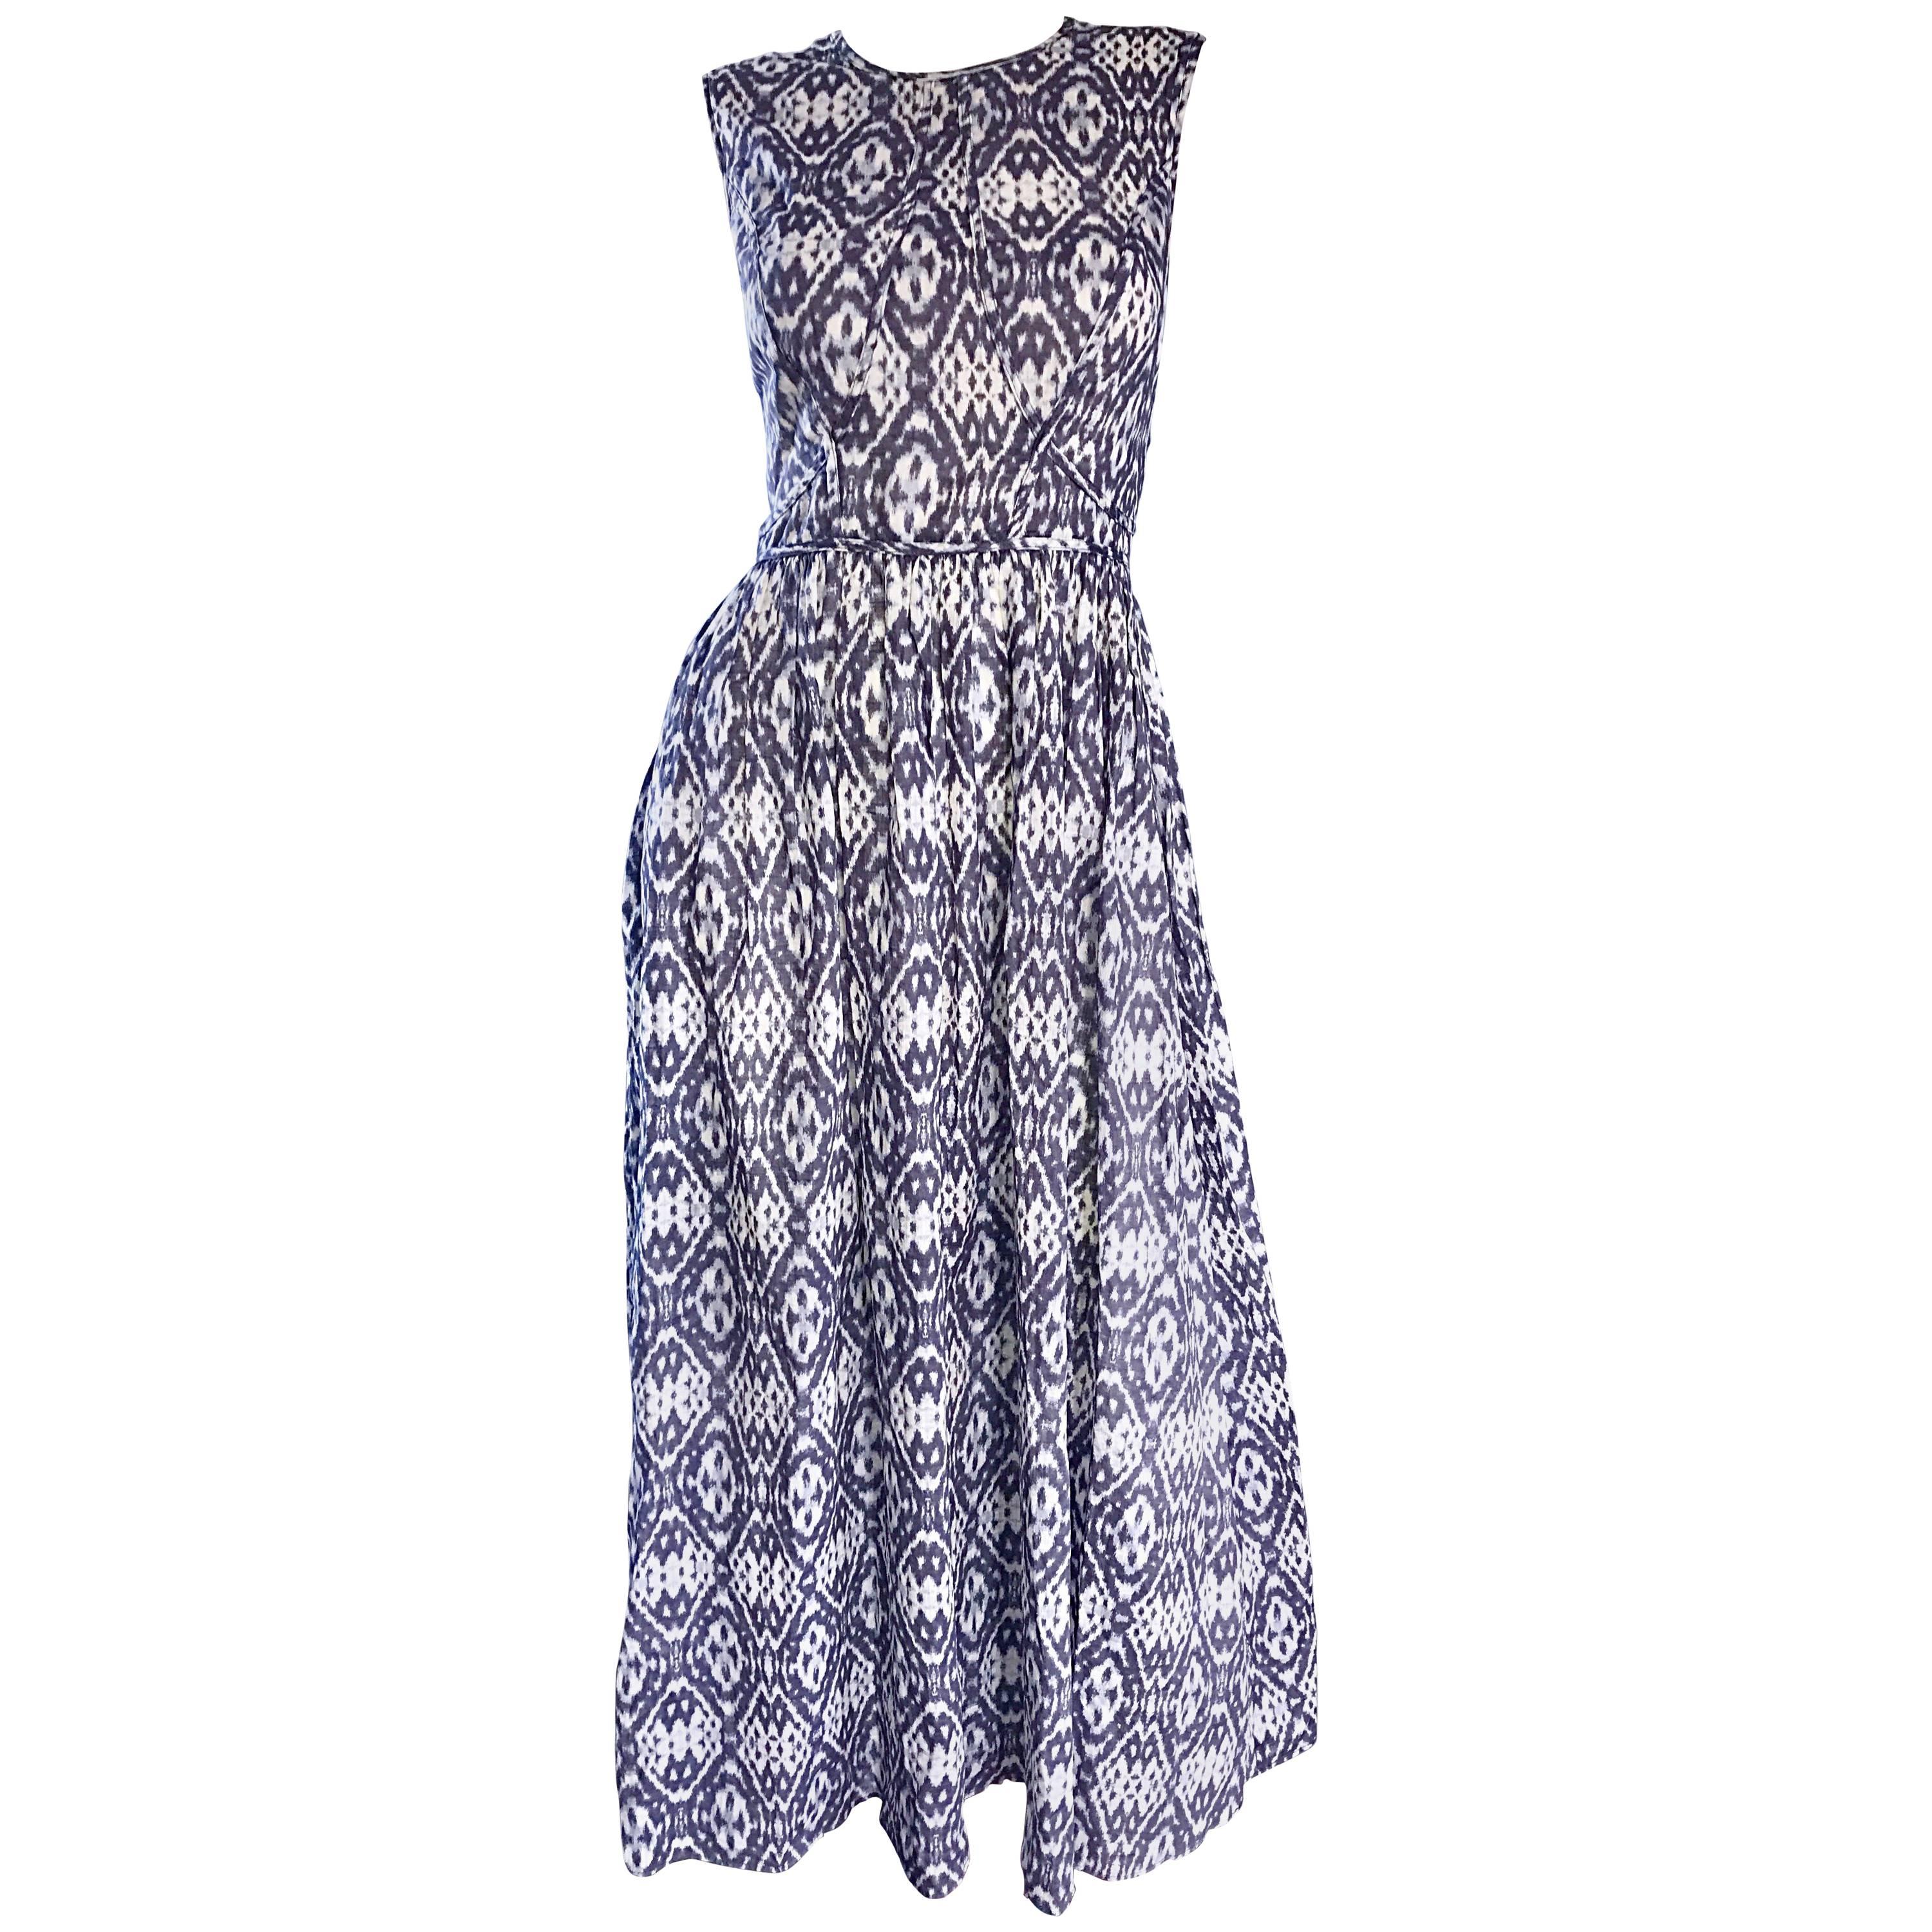 New Zimmermann Grey Lilac and White Ikat Print Chic Cotton Maxi Dress 